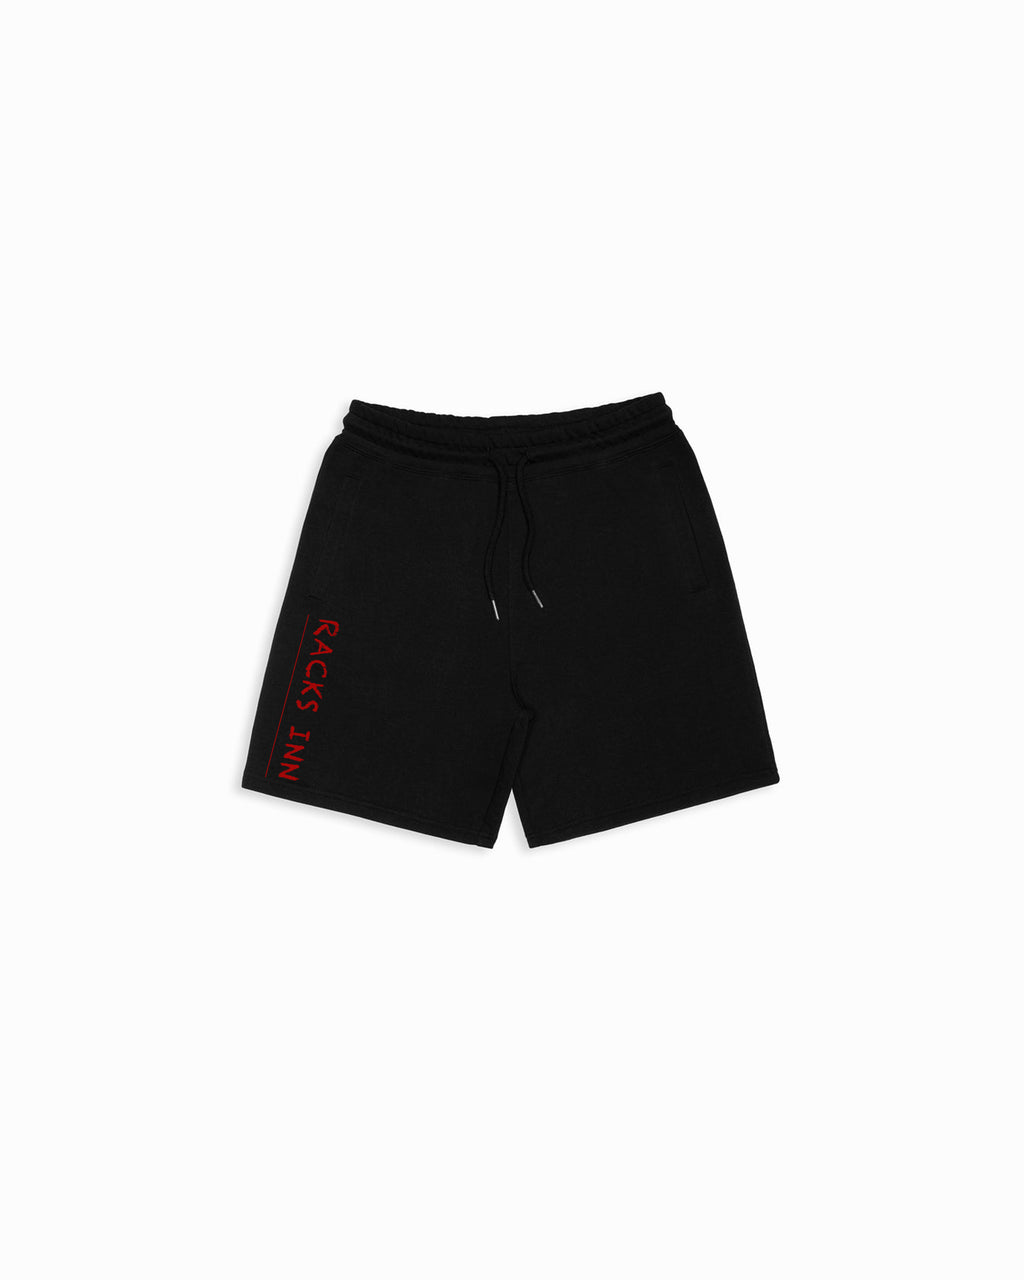 Powder Print Shorts - Black/Red